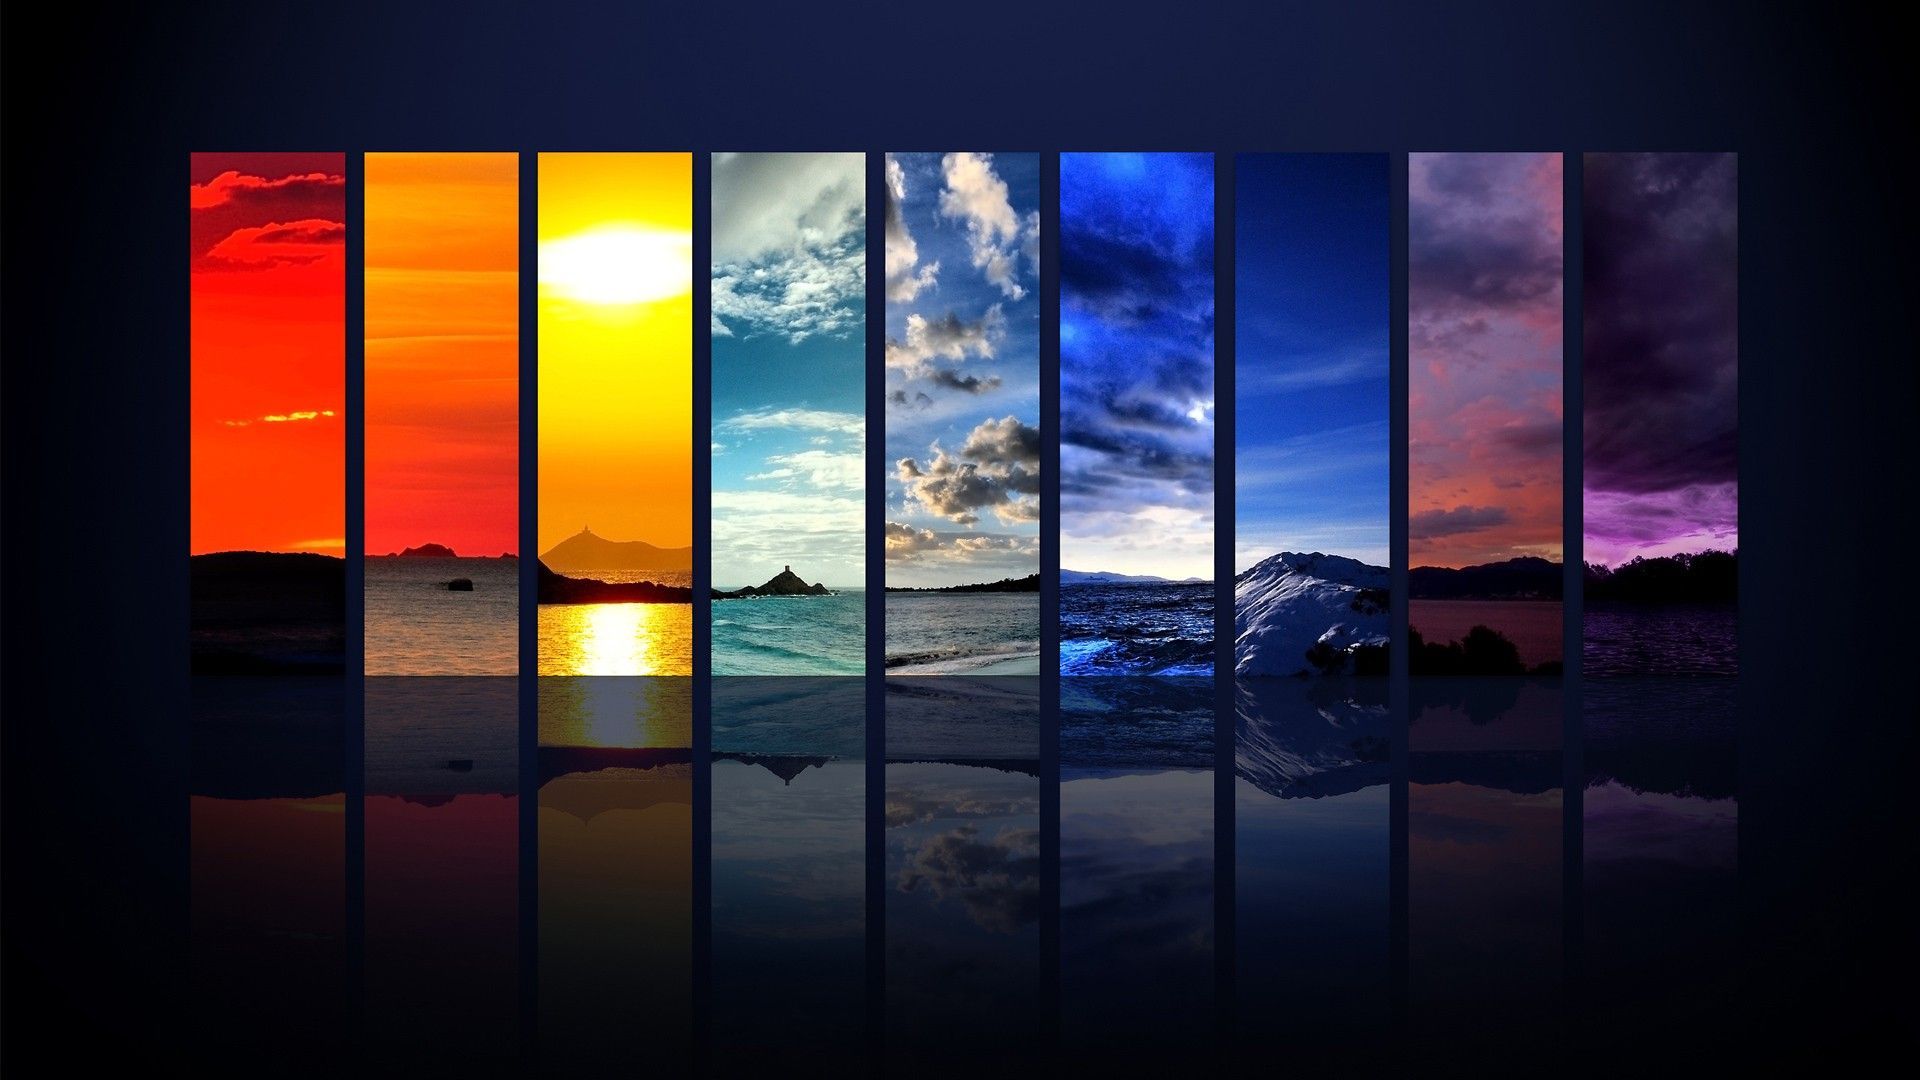 30 Awesome Desktop Backgrounds - Creative GAG